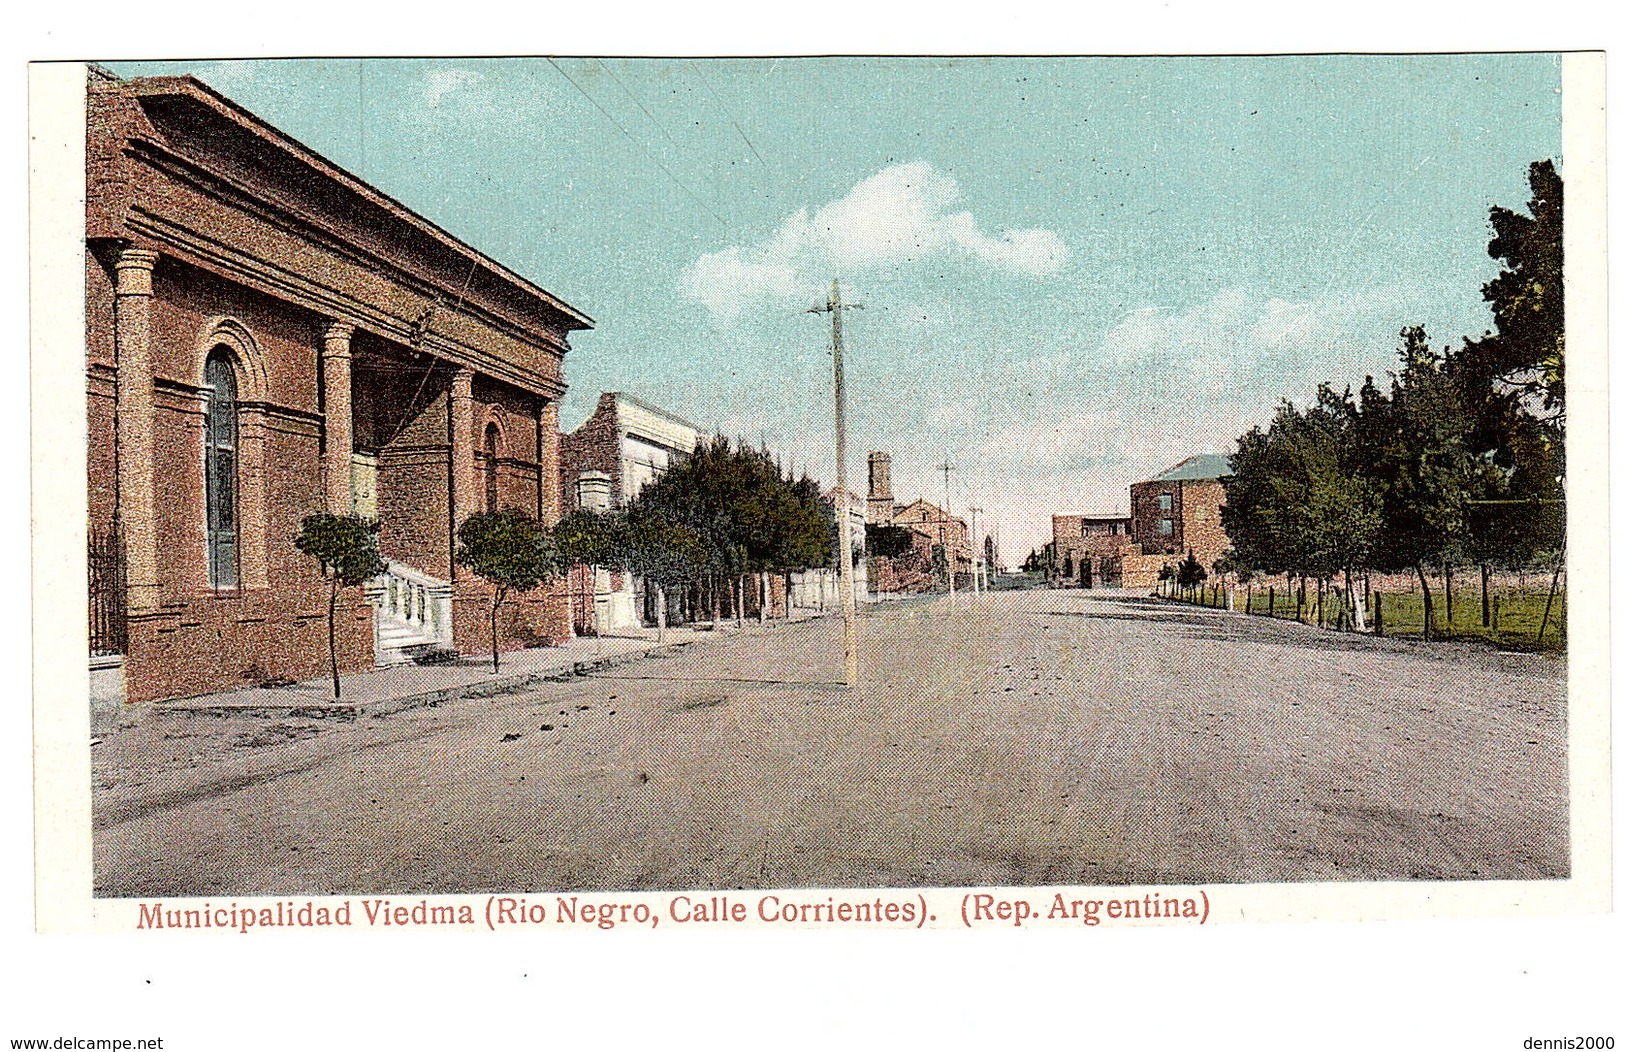 Municipalidad Viedma (Rio Negro, Calle Corrientes) - Argentine